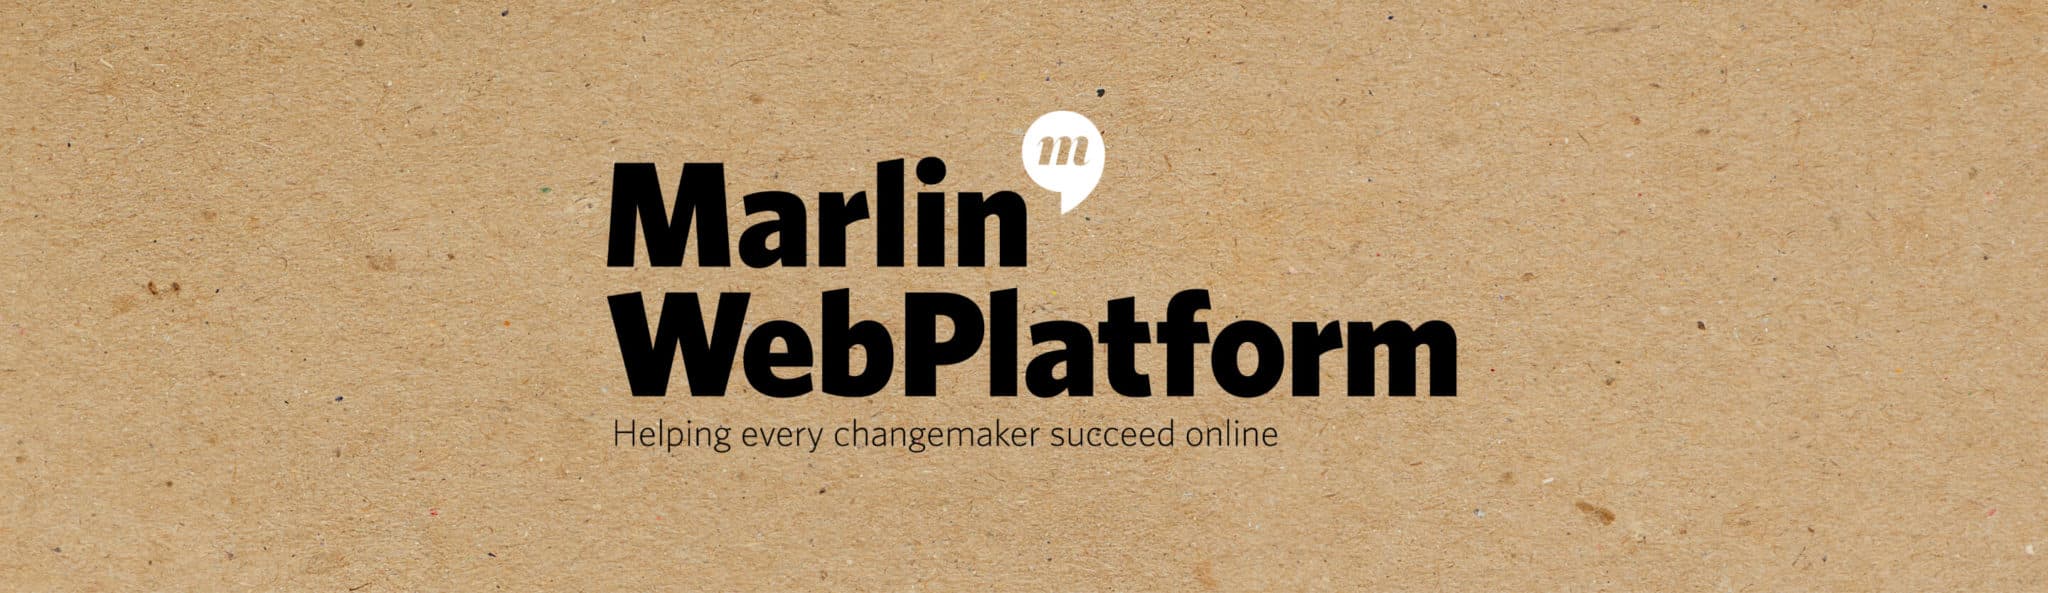 Marlin Communications Web Platform MWP